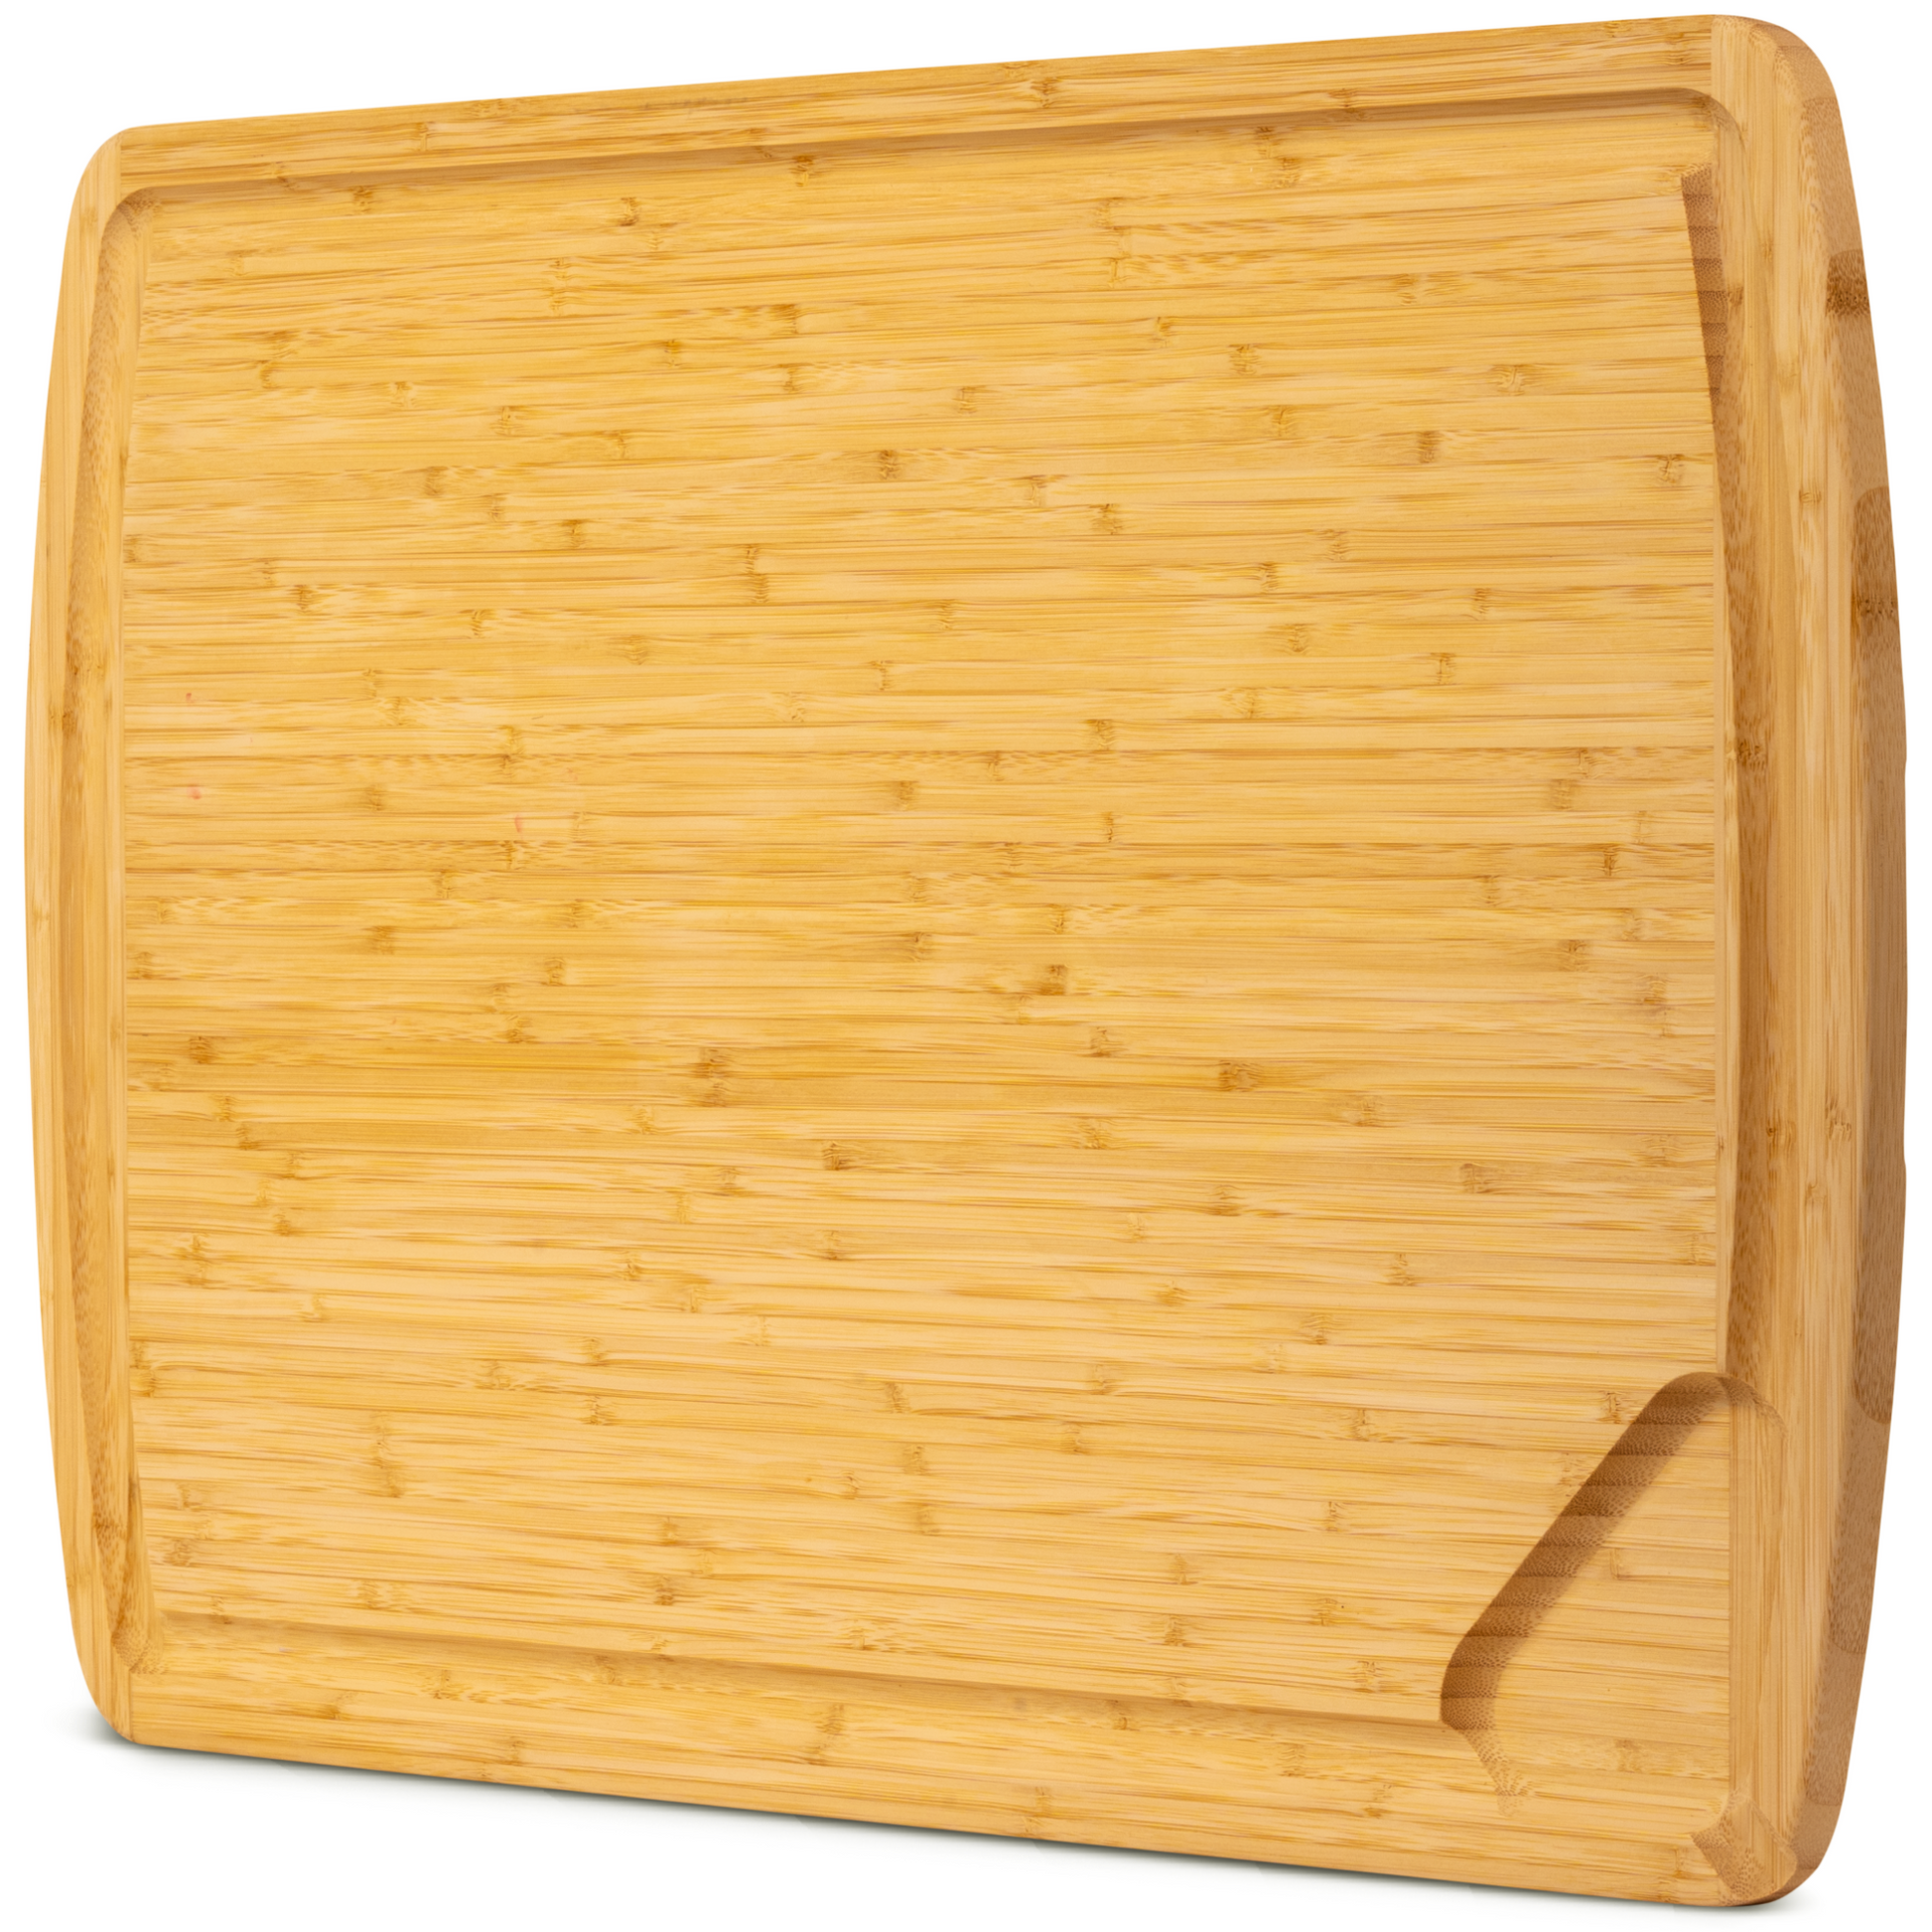 Walnut Cutting Board with Juice Groove, Flat Grain, 17 x 11 x 0.75